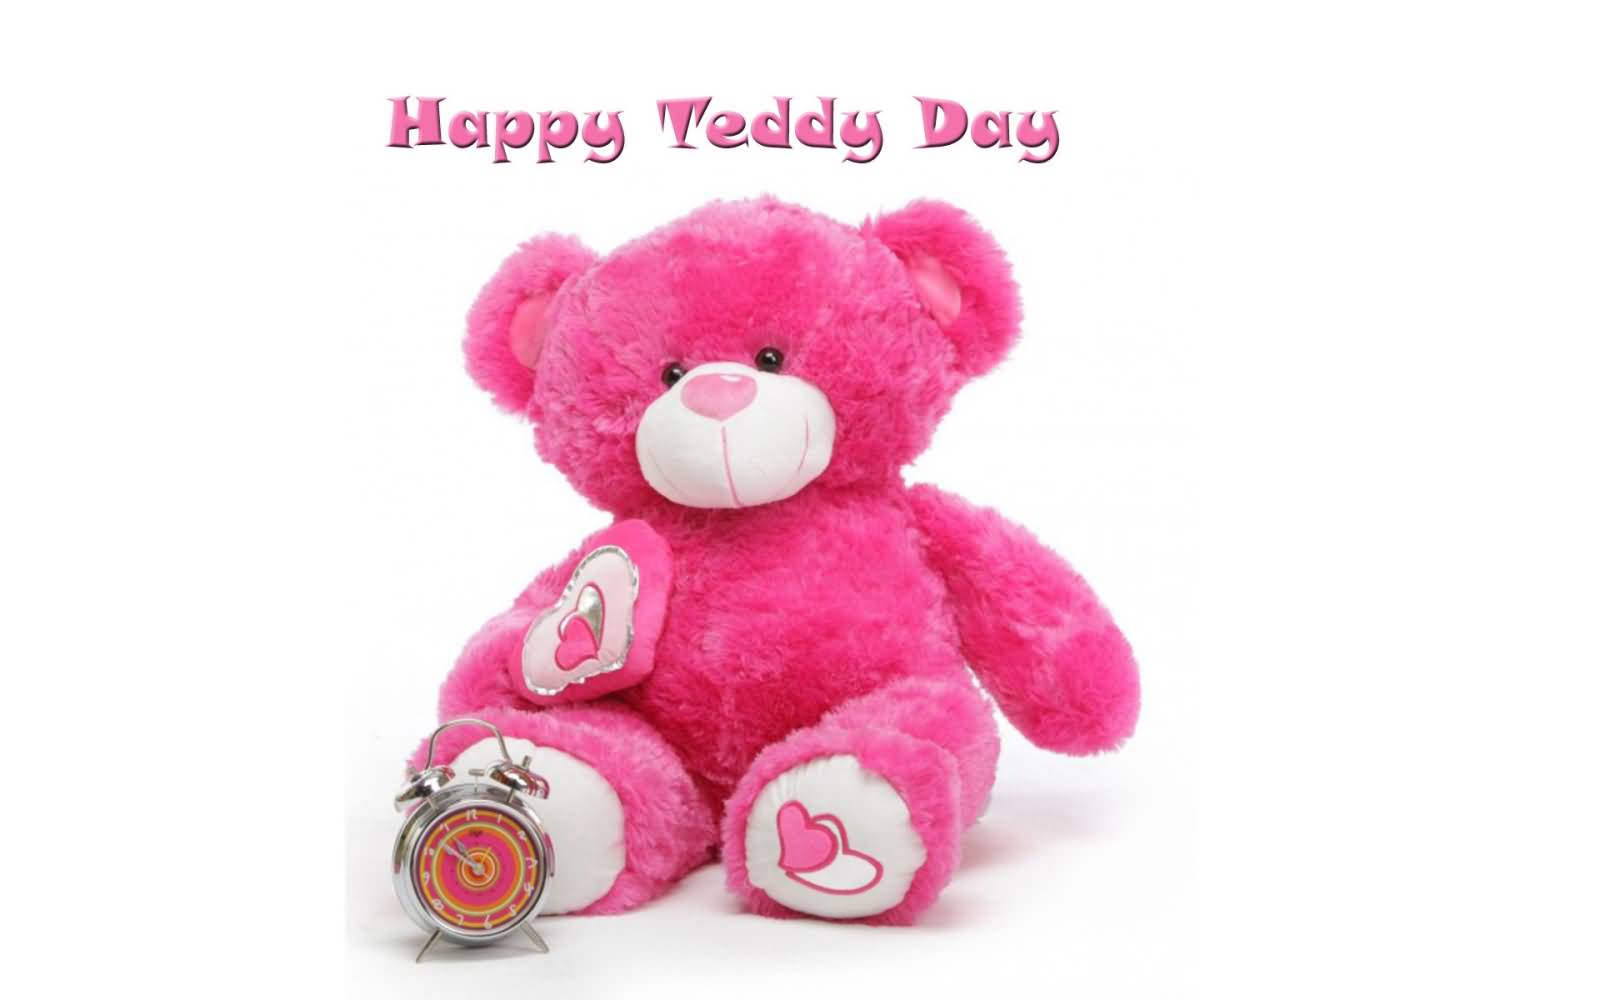 Happy Teddy Day Cute Pink Teddy Bear Wallpaper - Teddy Day Images Hd Download - HD Wallpaper 